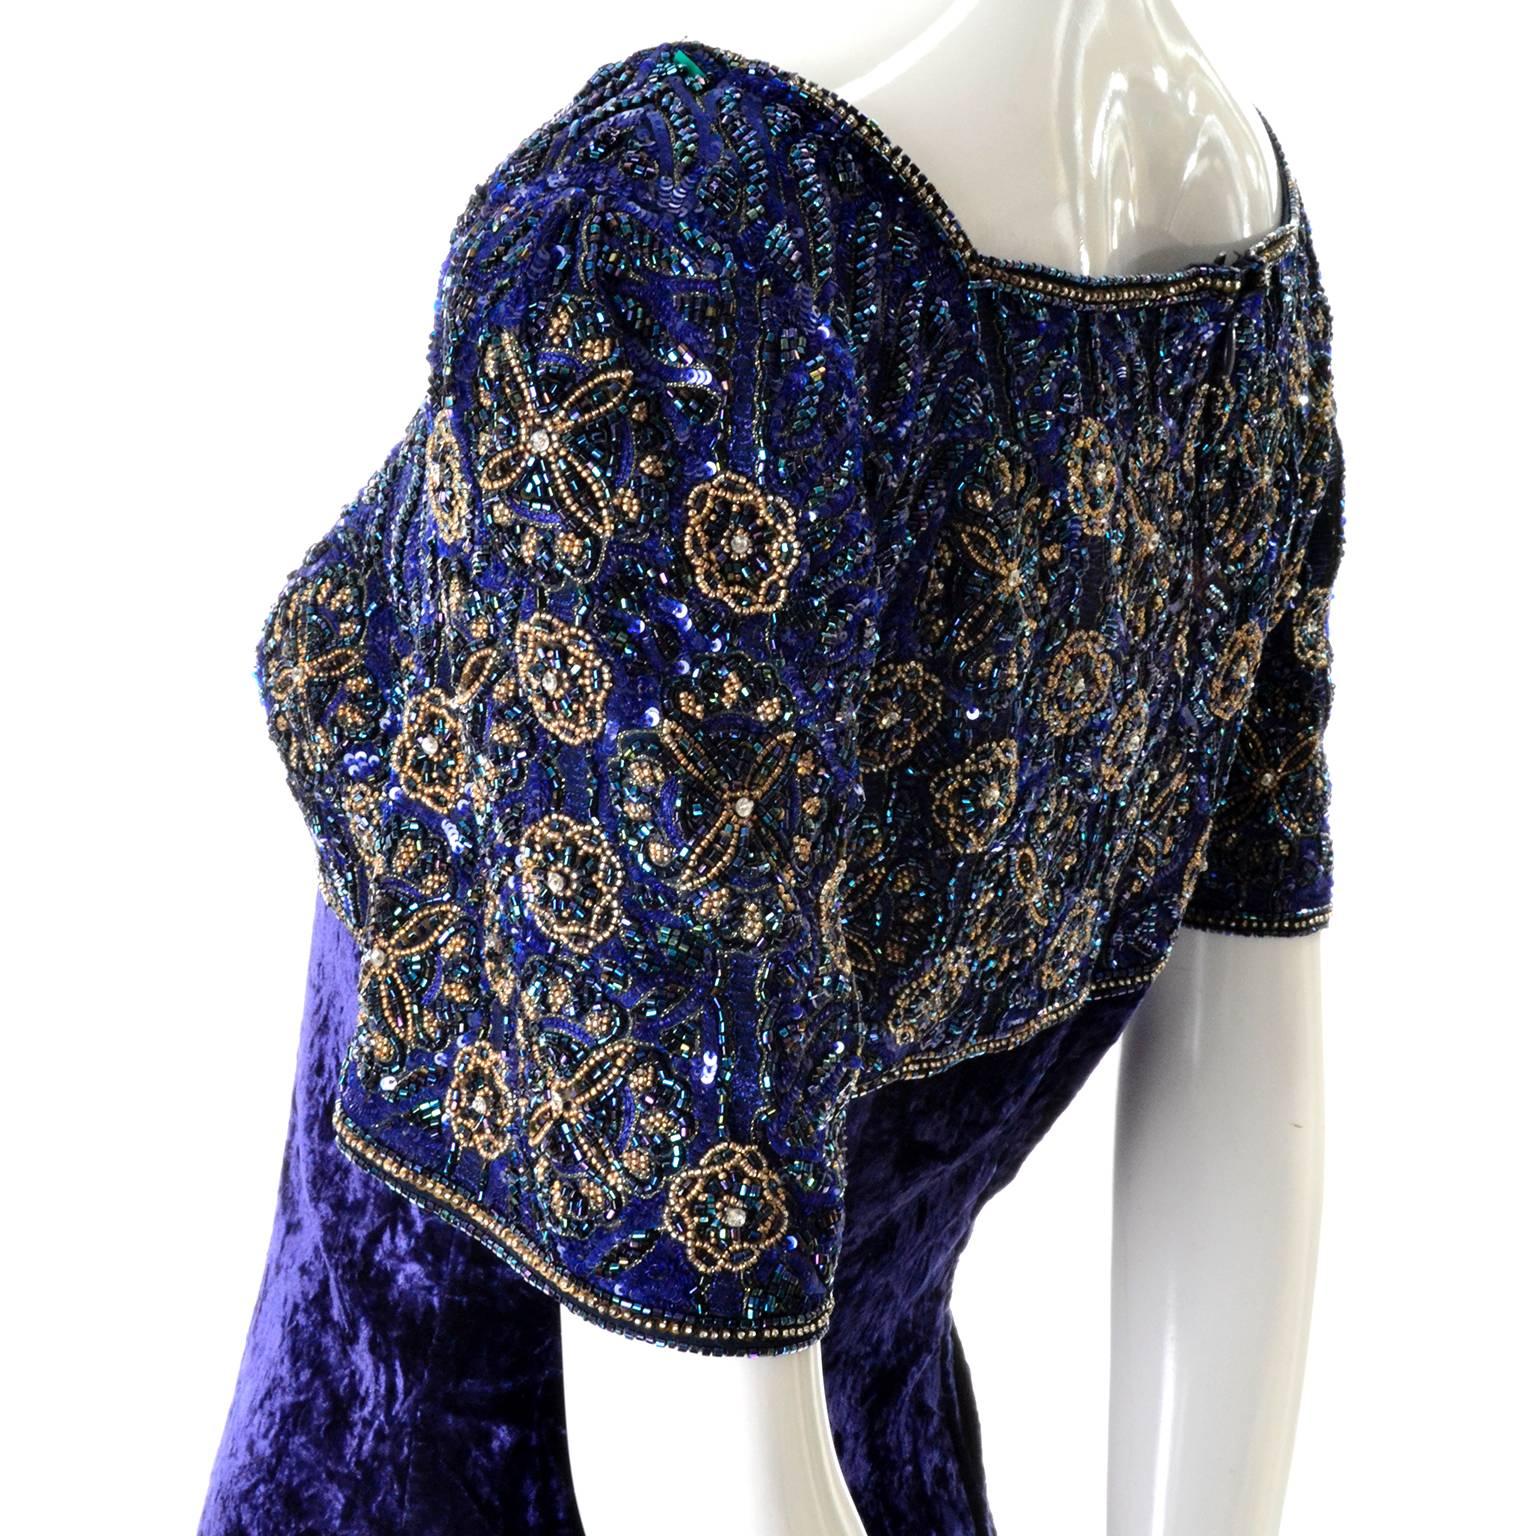 Black Escada Couture Vintage Blue Crushed Velvet Dress Evening Gown W Beads & Sequins 